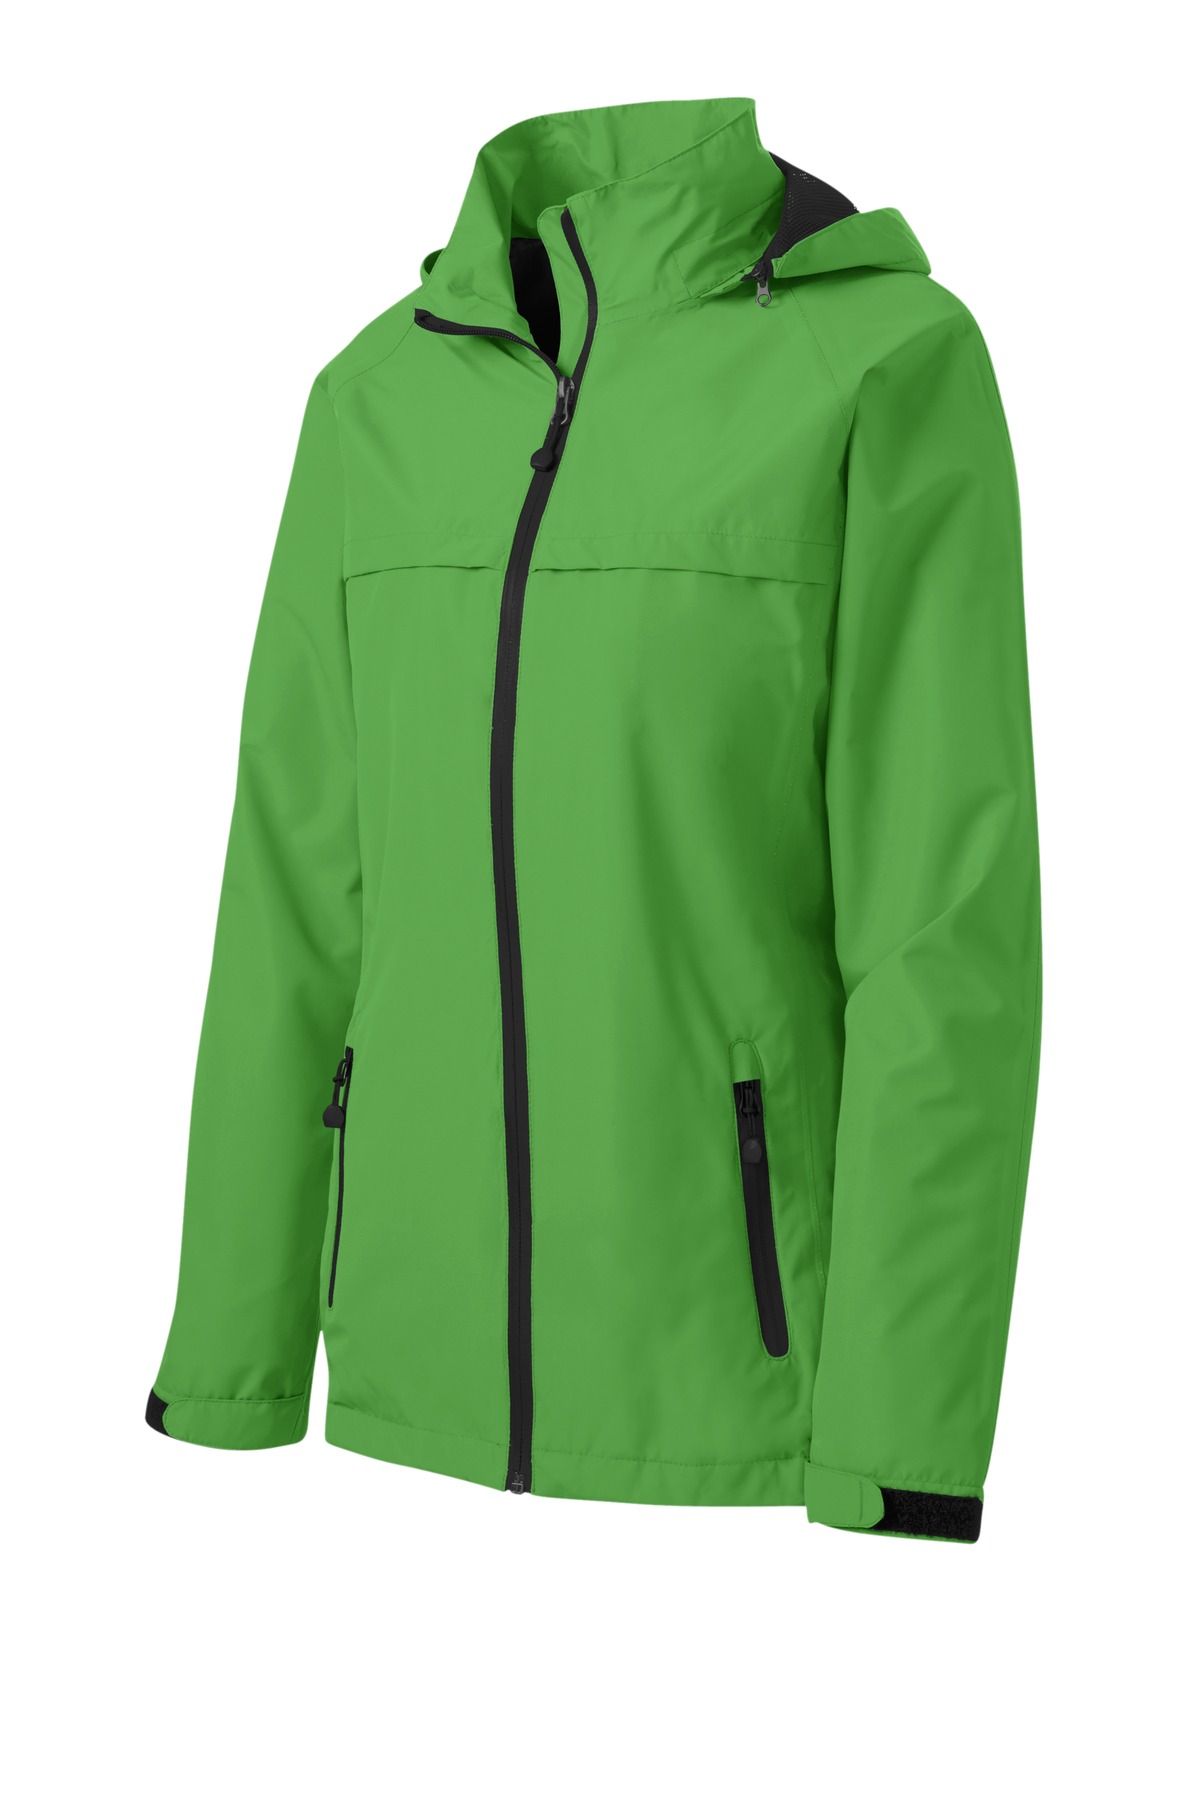 Port Authority Ladies Torrent Waterproof Jacket-L (Vine Green) - image 5 of 6